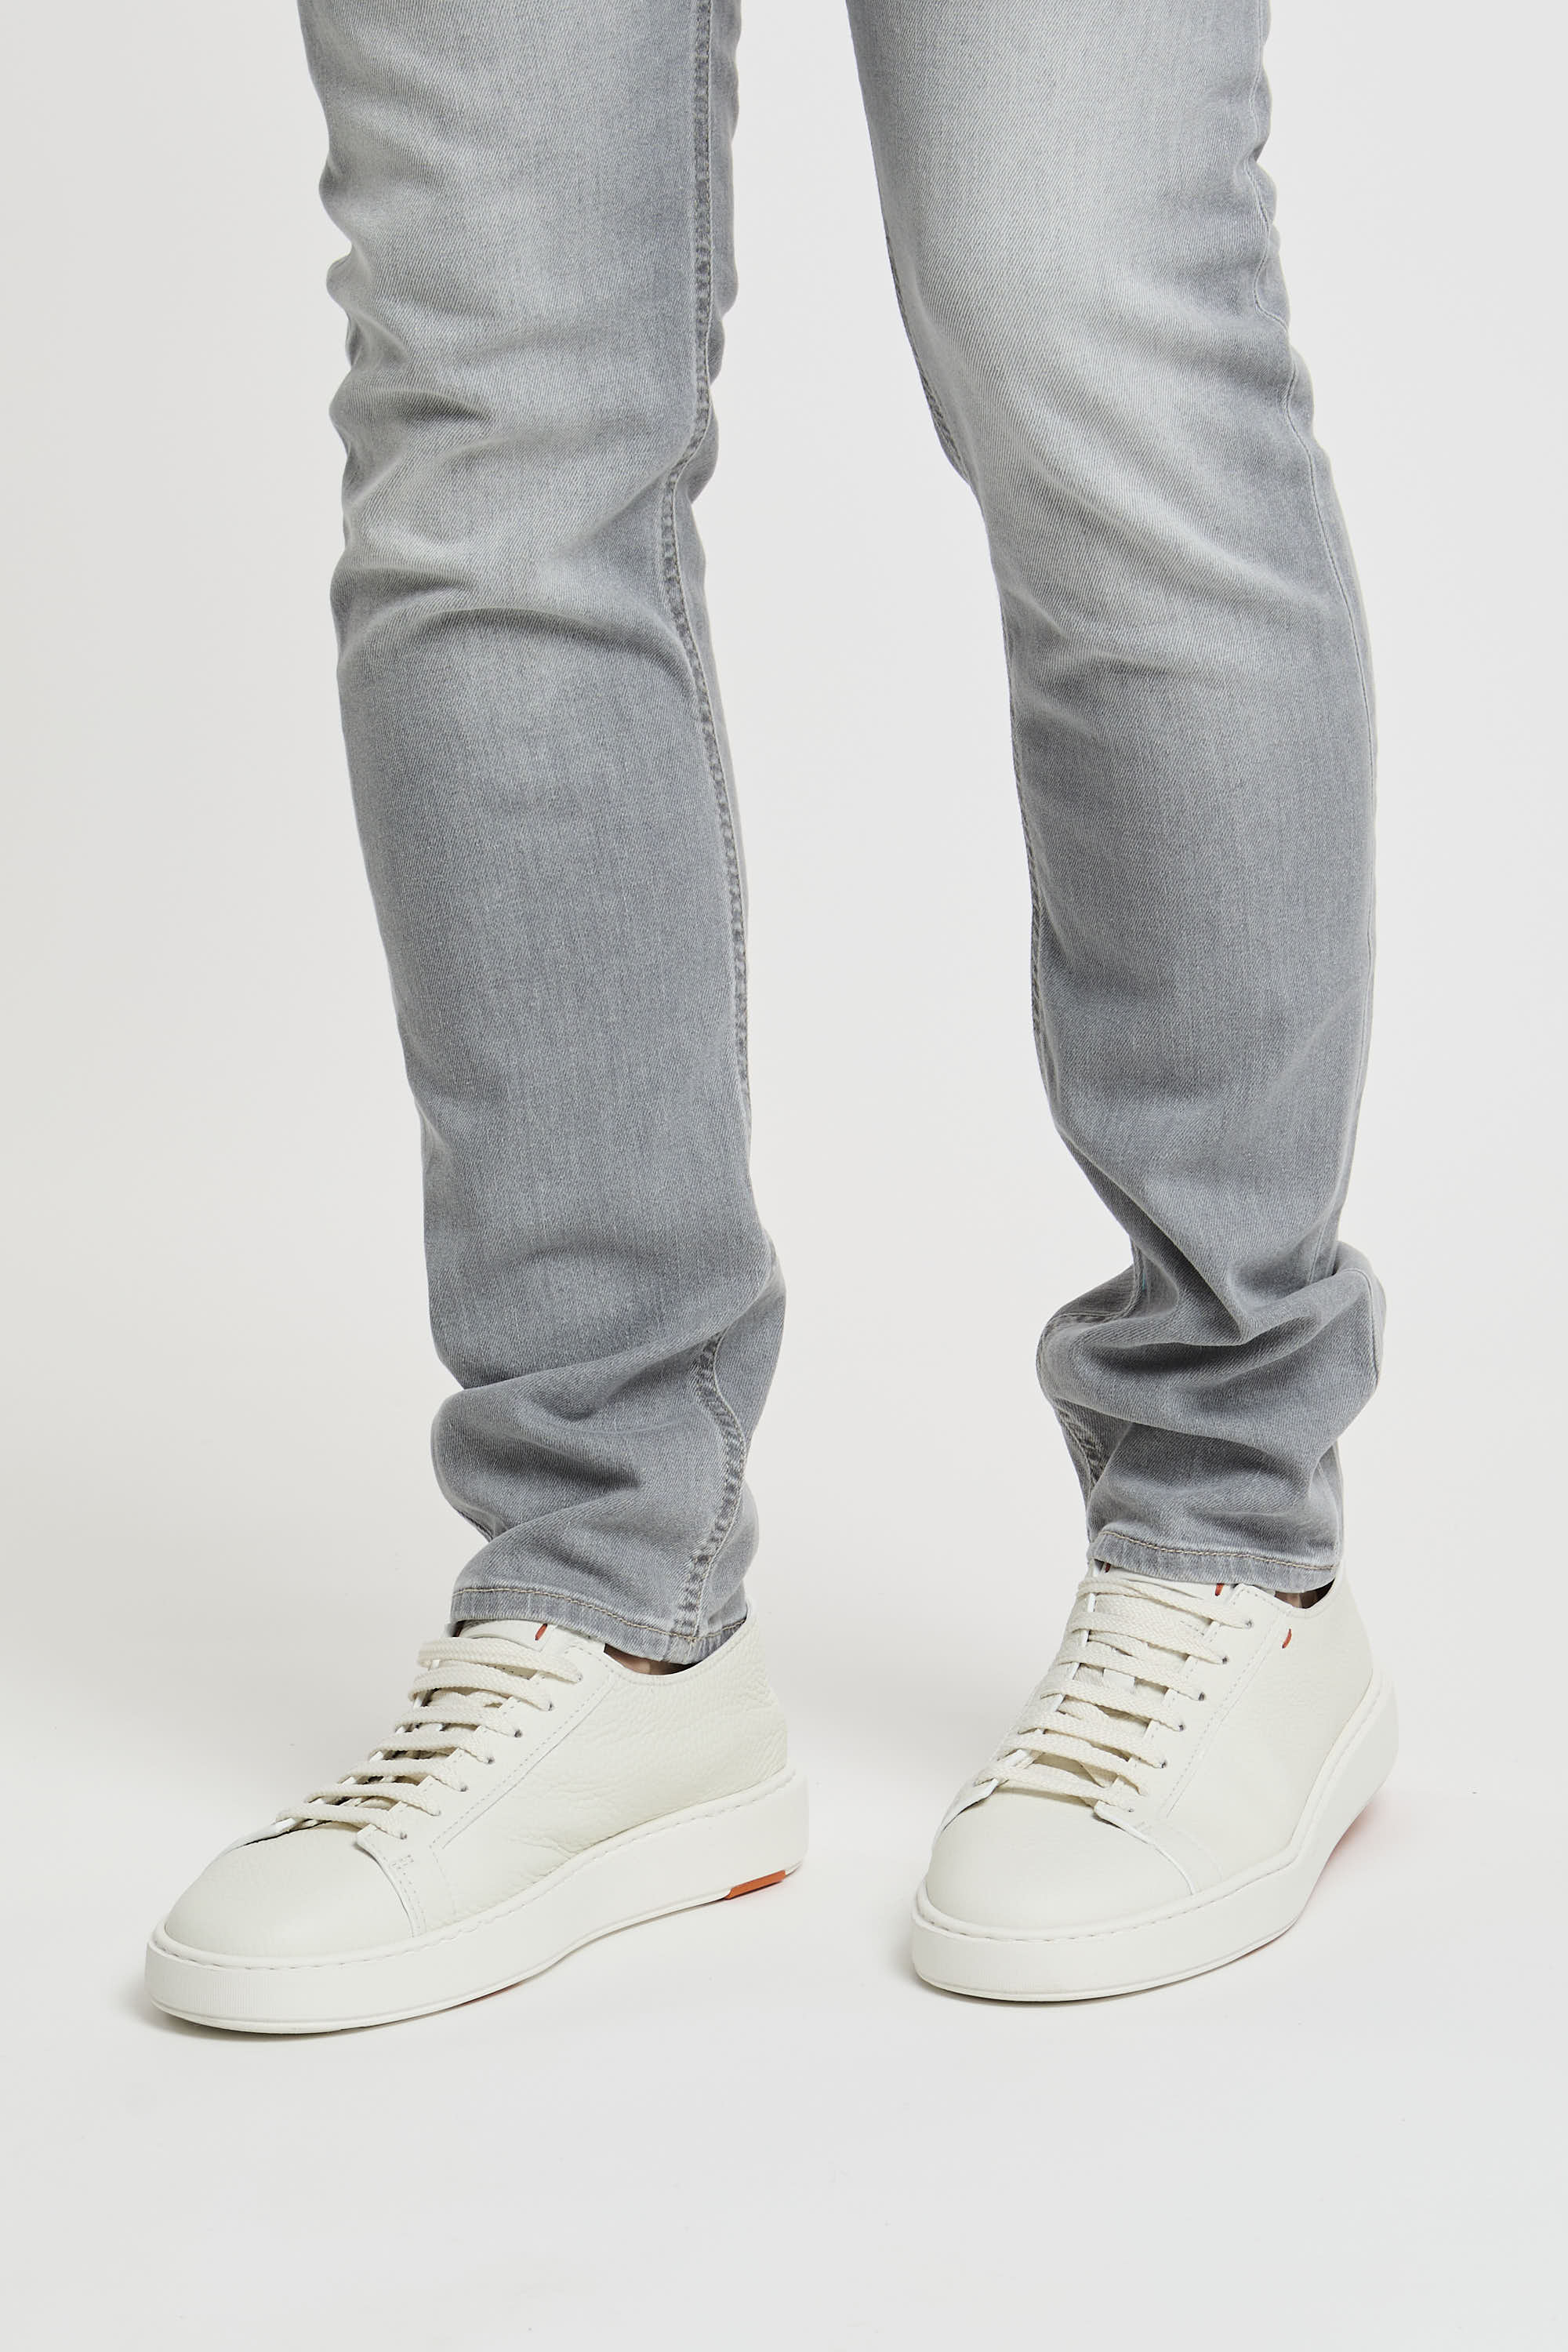 Handpicked Jeans Orvieto Cotton Grey-7